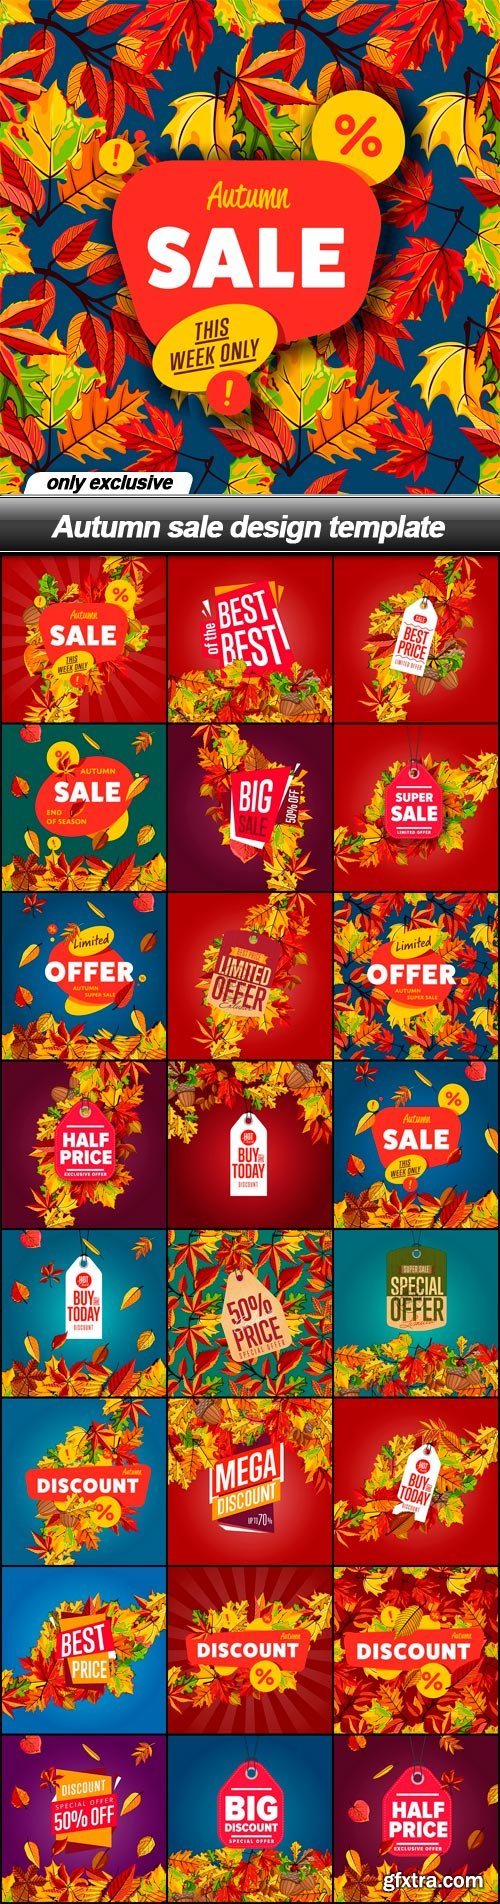 Autumn sale design template - 25 EPS